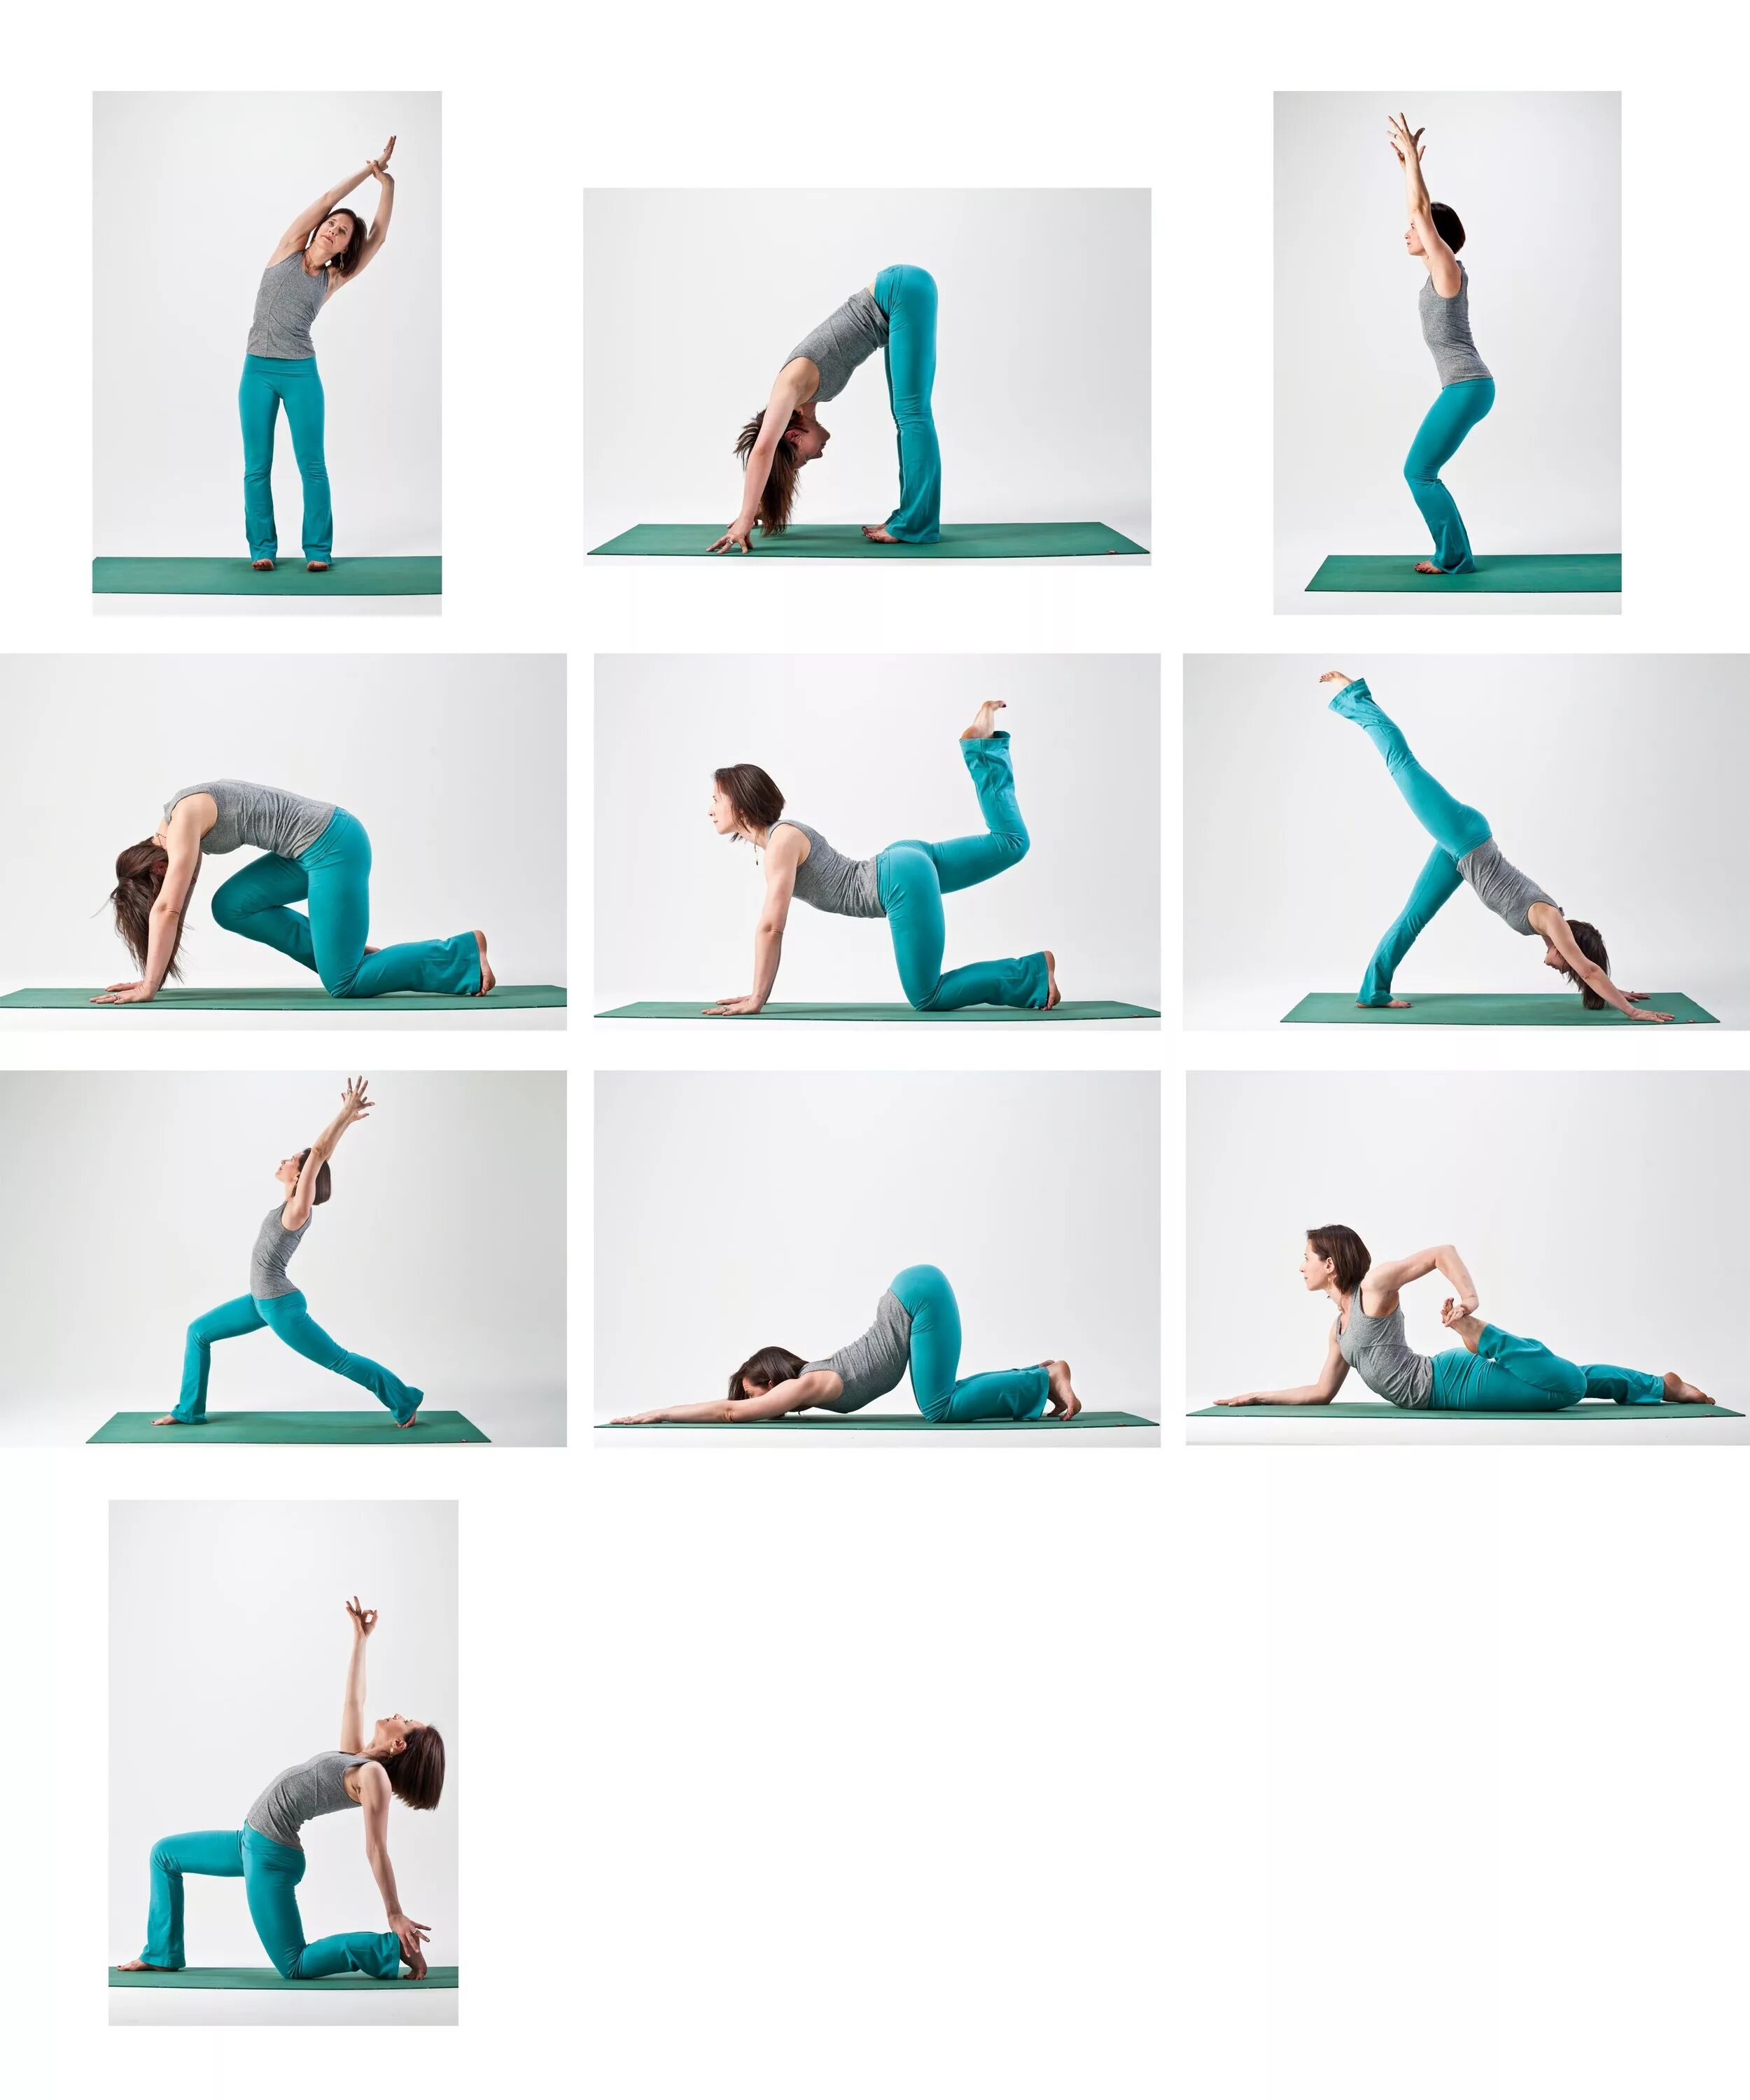 Йога 1 занятия. Хатха-йога комплекс асан. Йога Айенгара асаны. Хатха йога упражнения для начинающих. Йога основные асаны для начинающих.